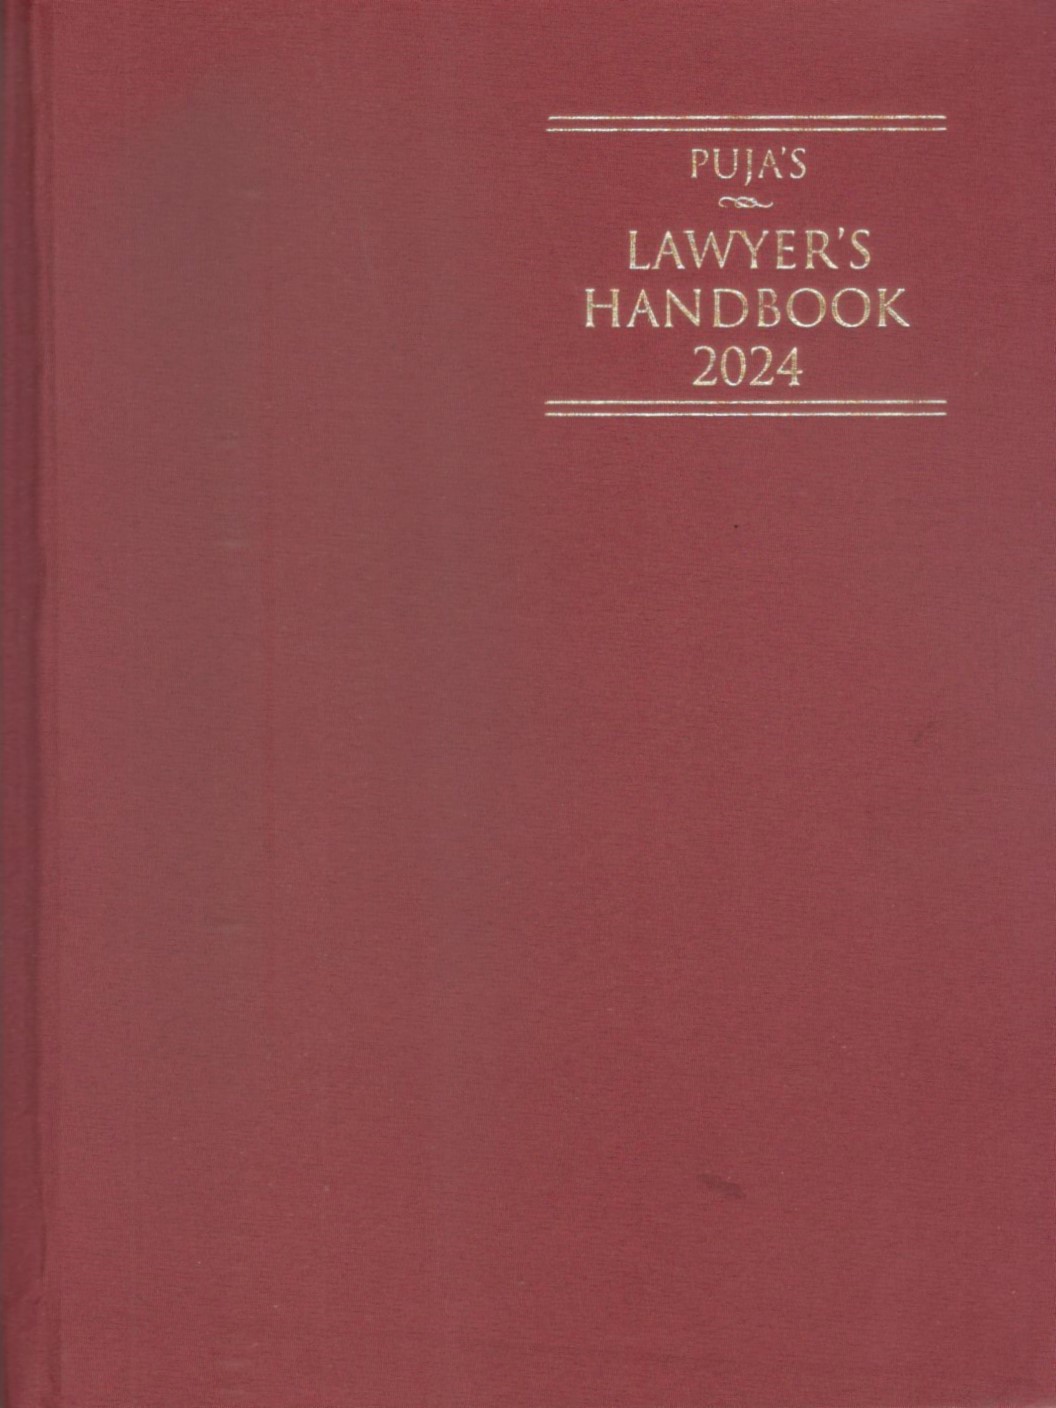 Puja’s Lawyer’s Handbook 2024 - Maroon small Size Regular Hardbound